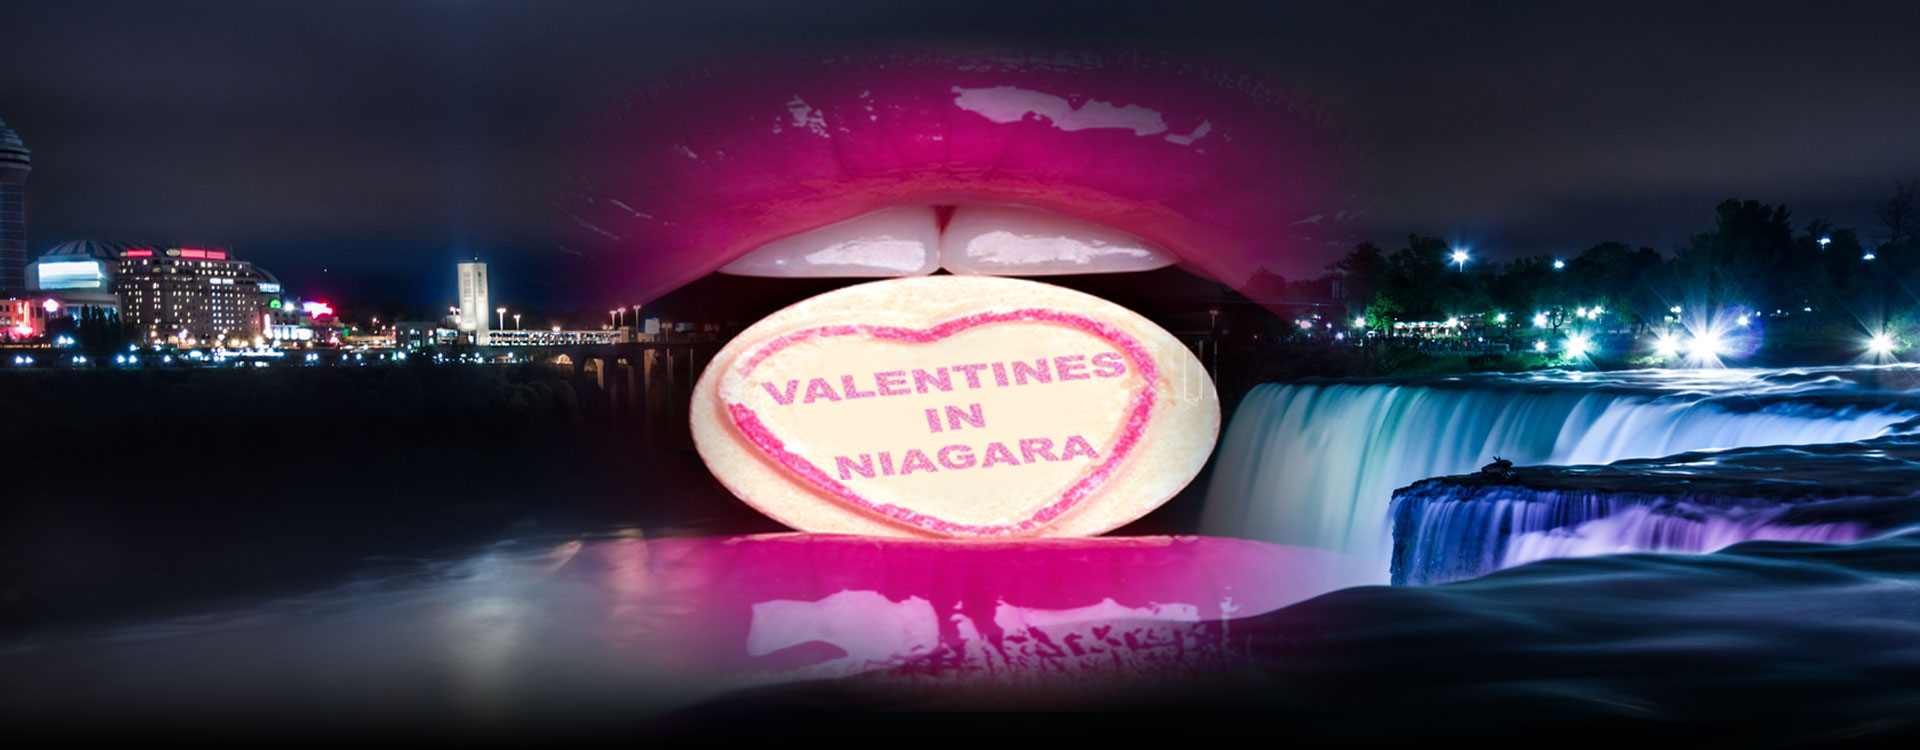 Niagara Falls Swingers Convention, Swingers Event Valentines in Niagara image